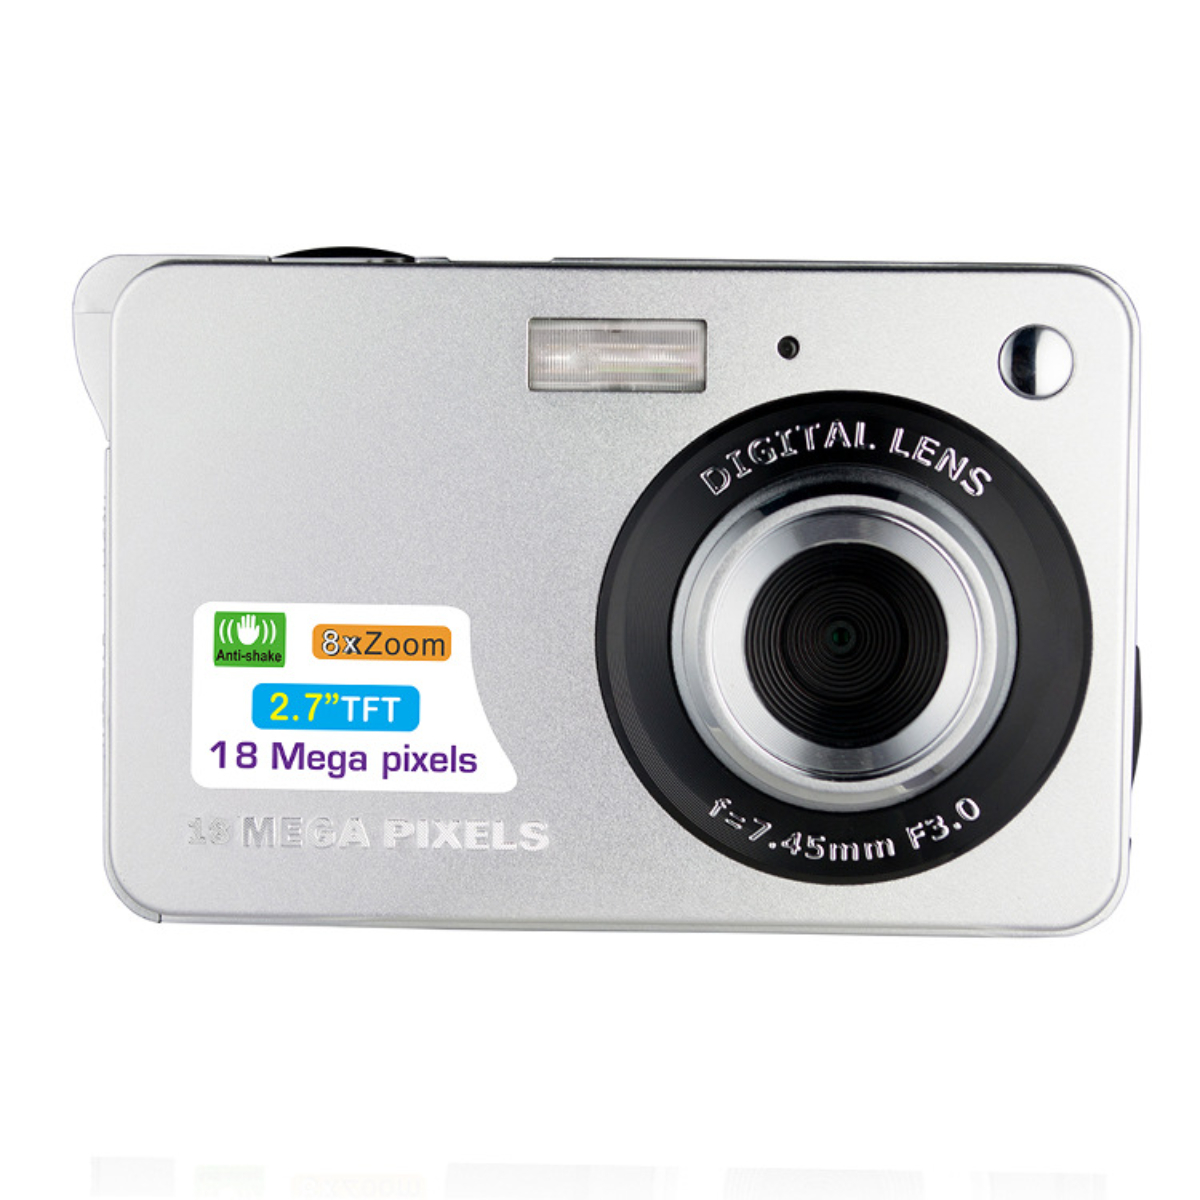 SYNTEK Kamera Video und Digitalkamera Digitalkamera kleine Foto all-in-one TFT-LCD SLR Megapixel weiß, weiß 18